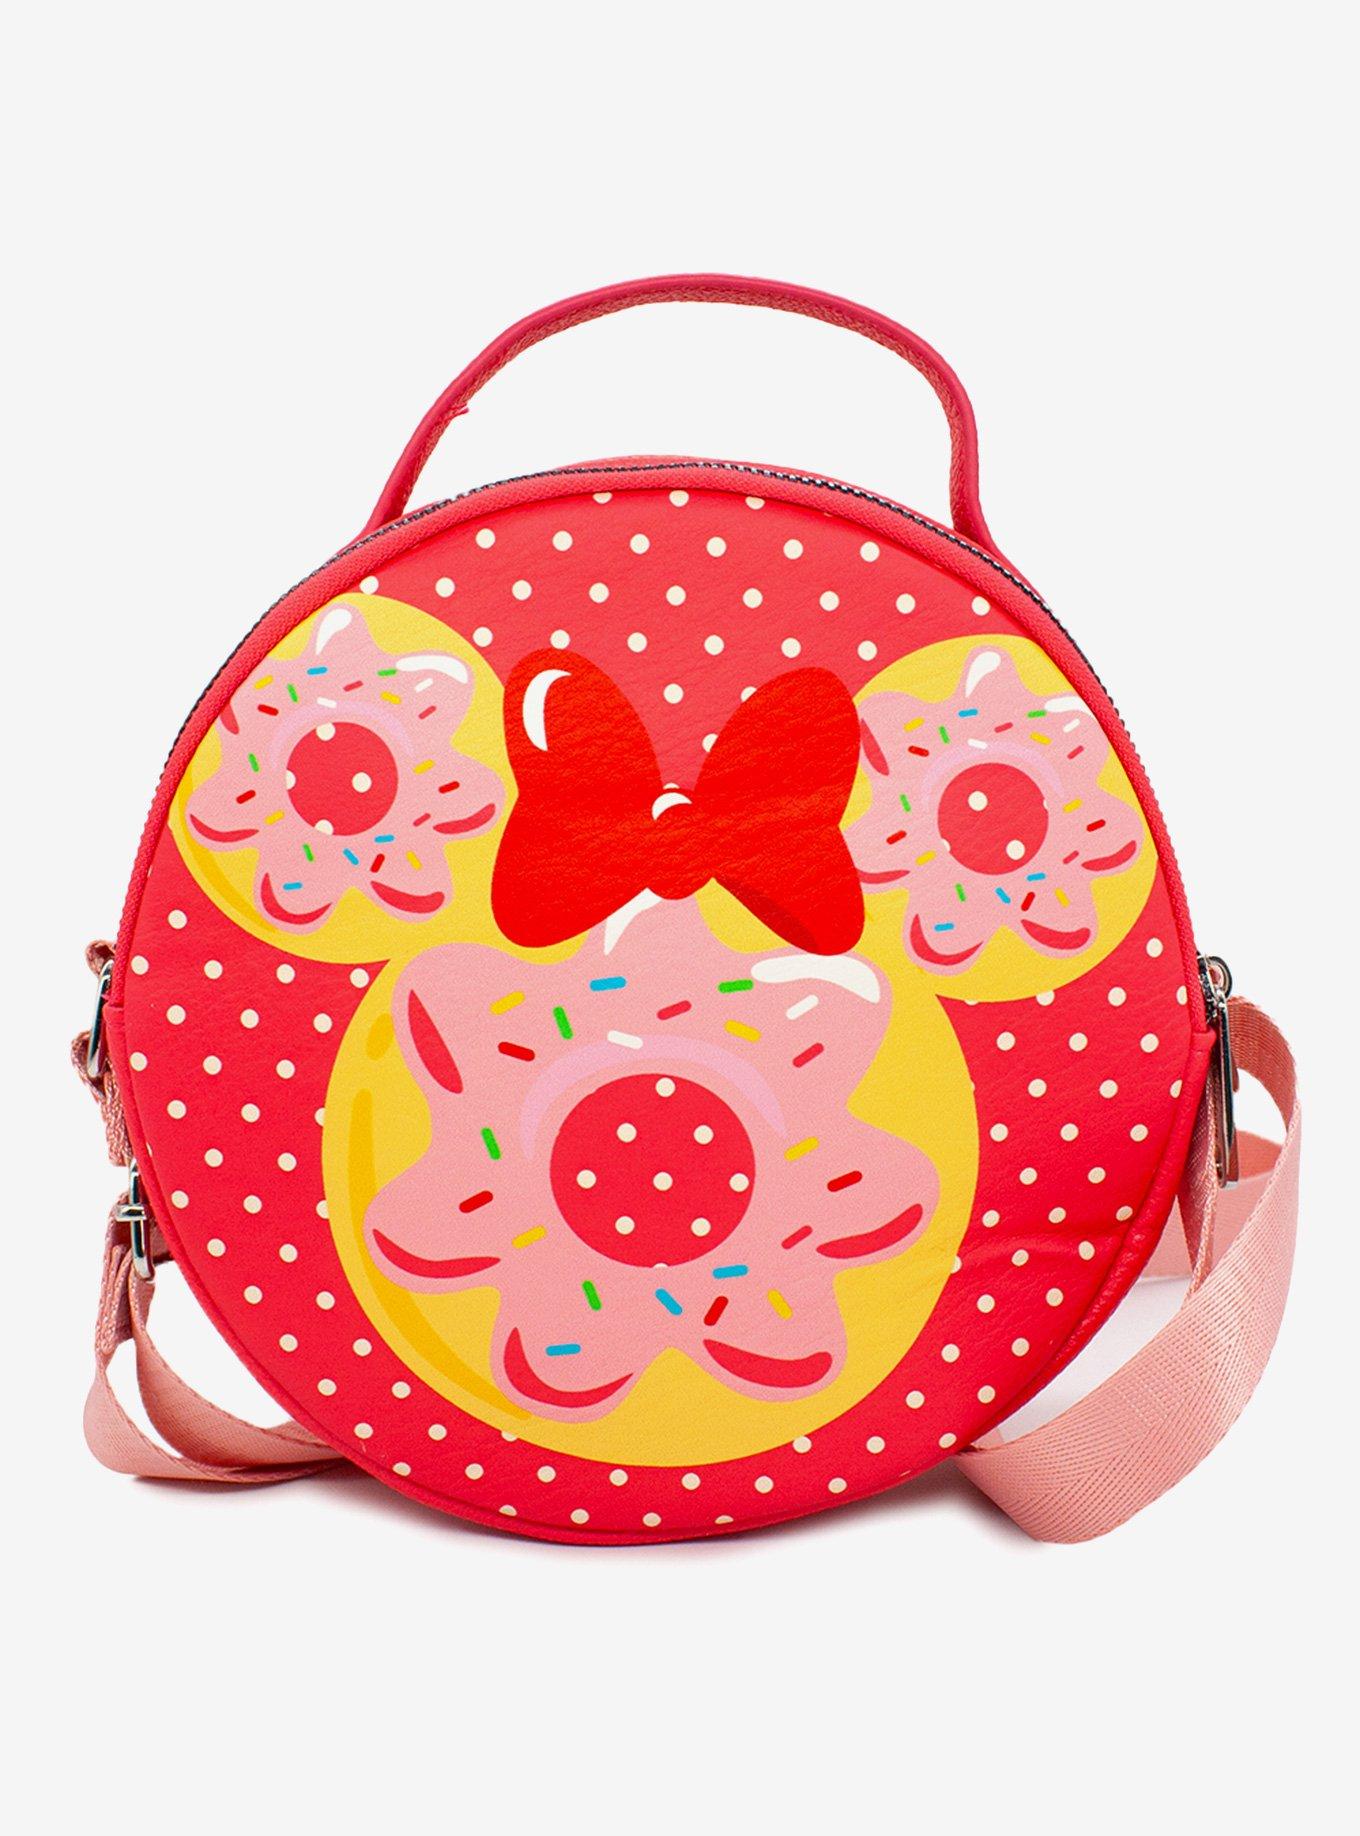 Disney Minnie Mouse Bow And Ears Donut Dessert With Polka Dot Cross Body Bag, , alternate